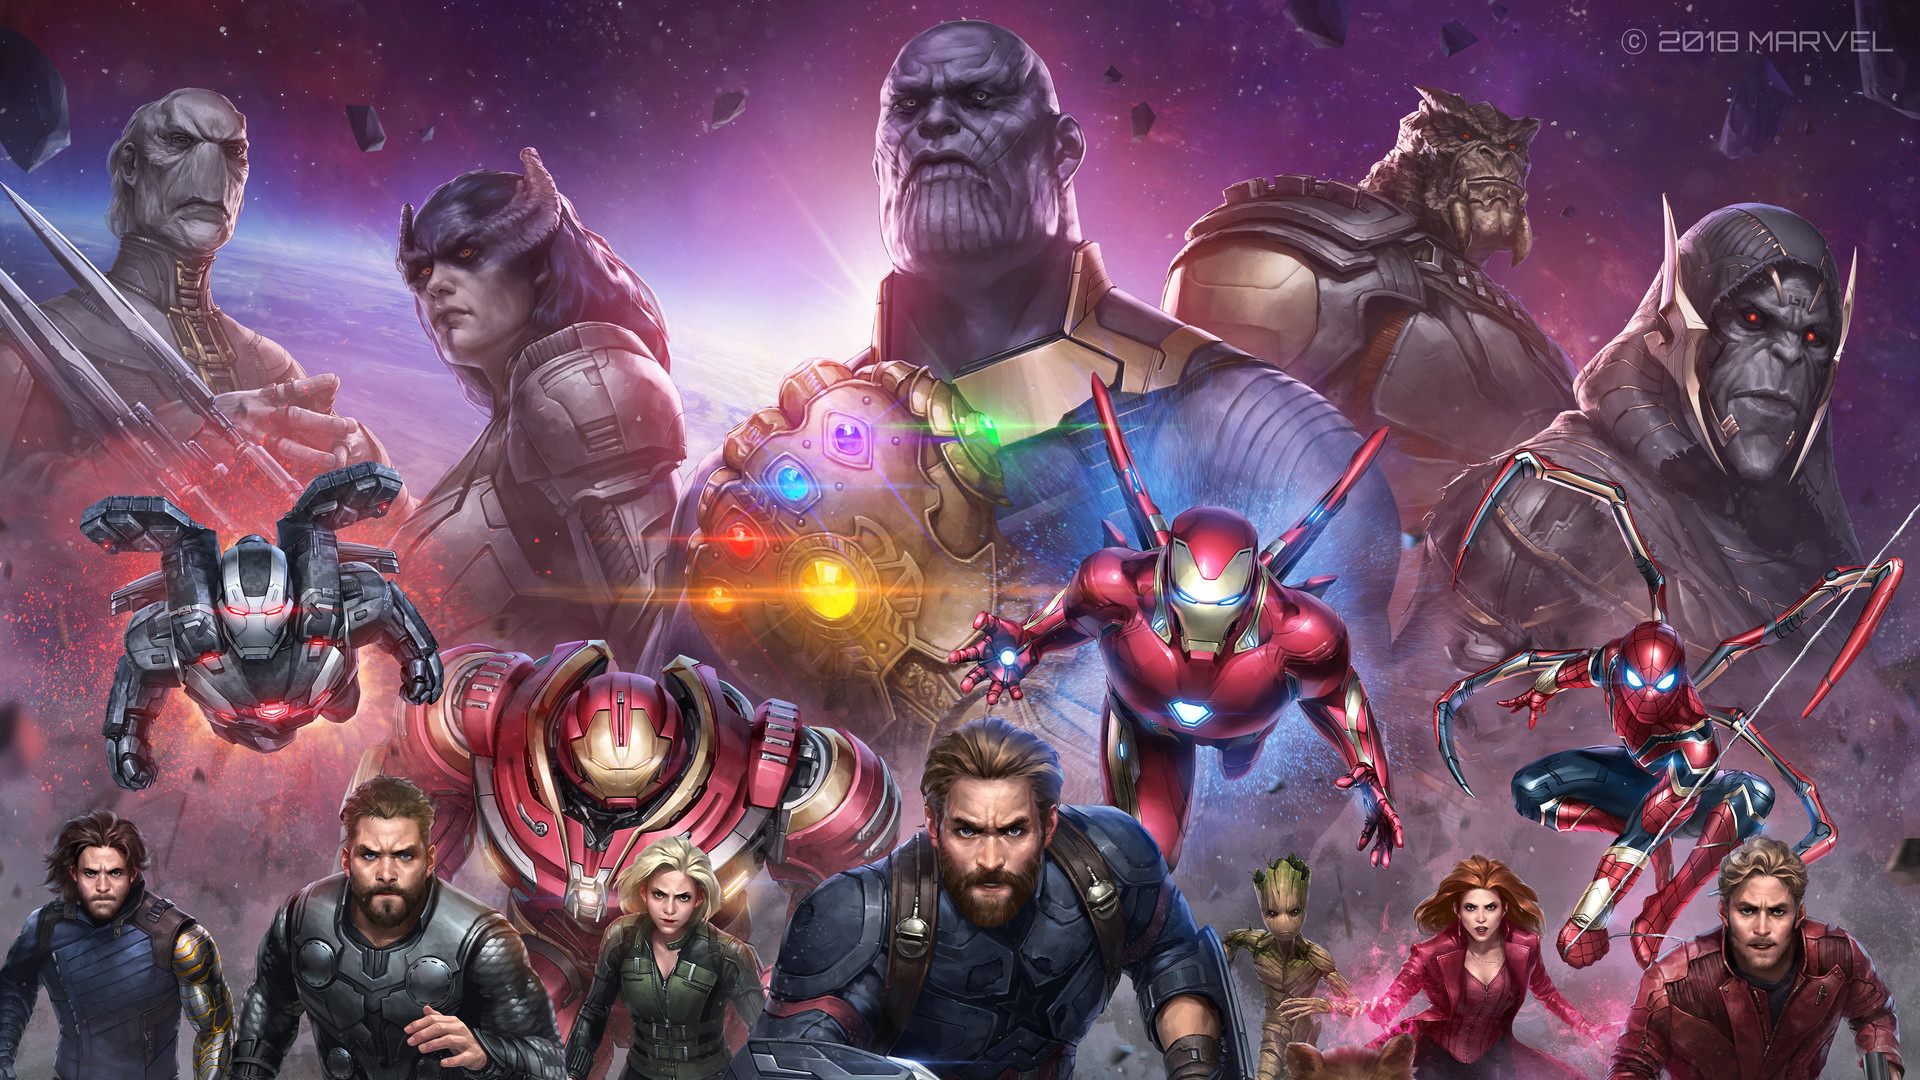 Avengers: infinity war, future marvel, artwork wallpaper, HD image, picture, background, eeb805